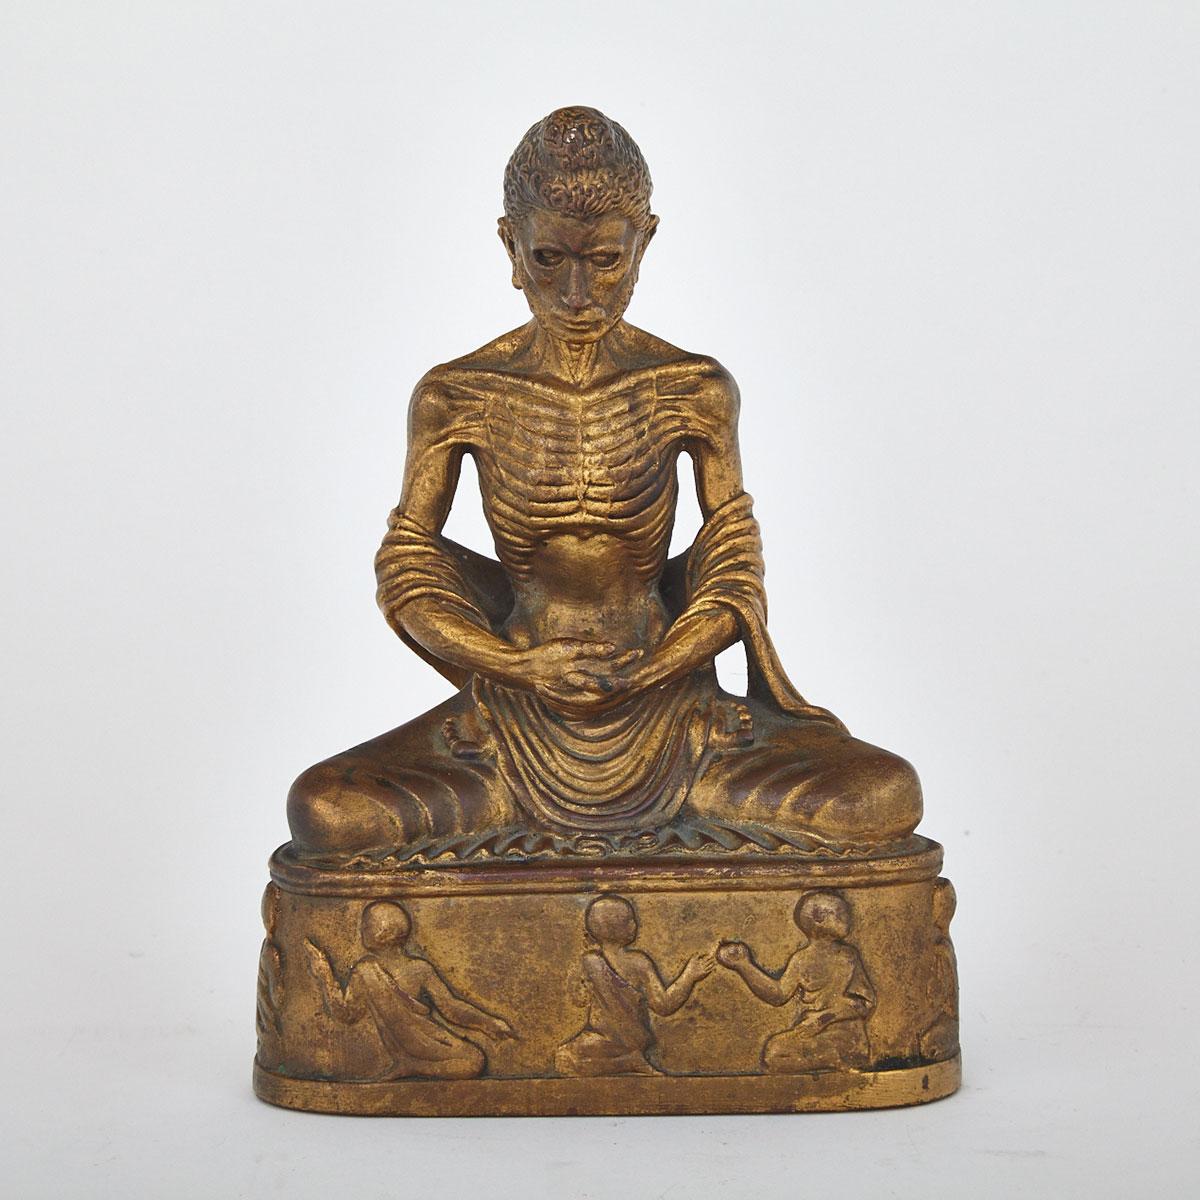 Seated Figure of Buddha, Tibet or China